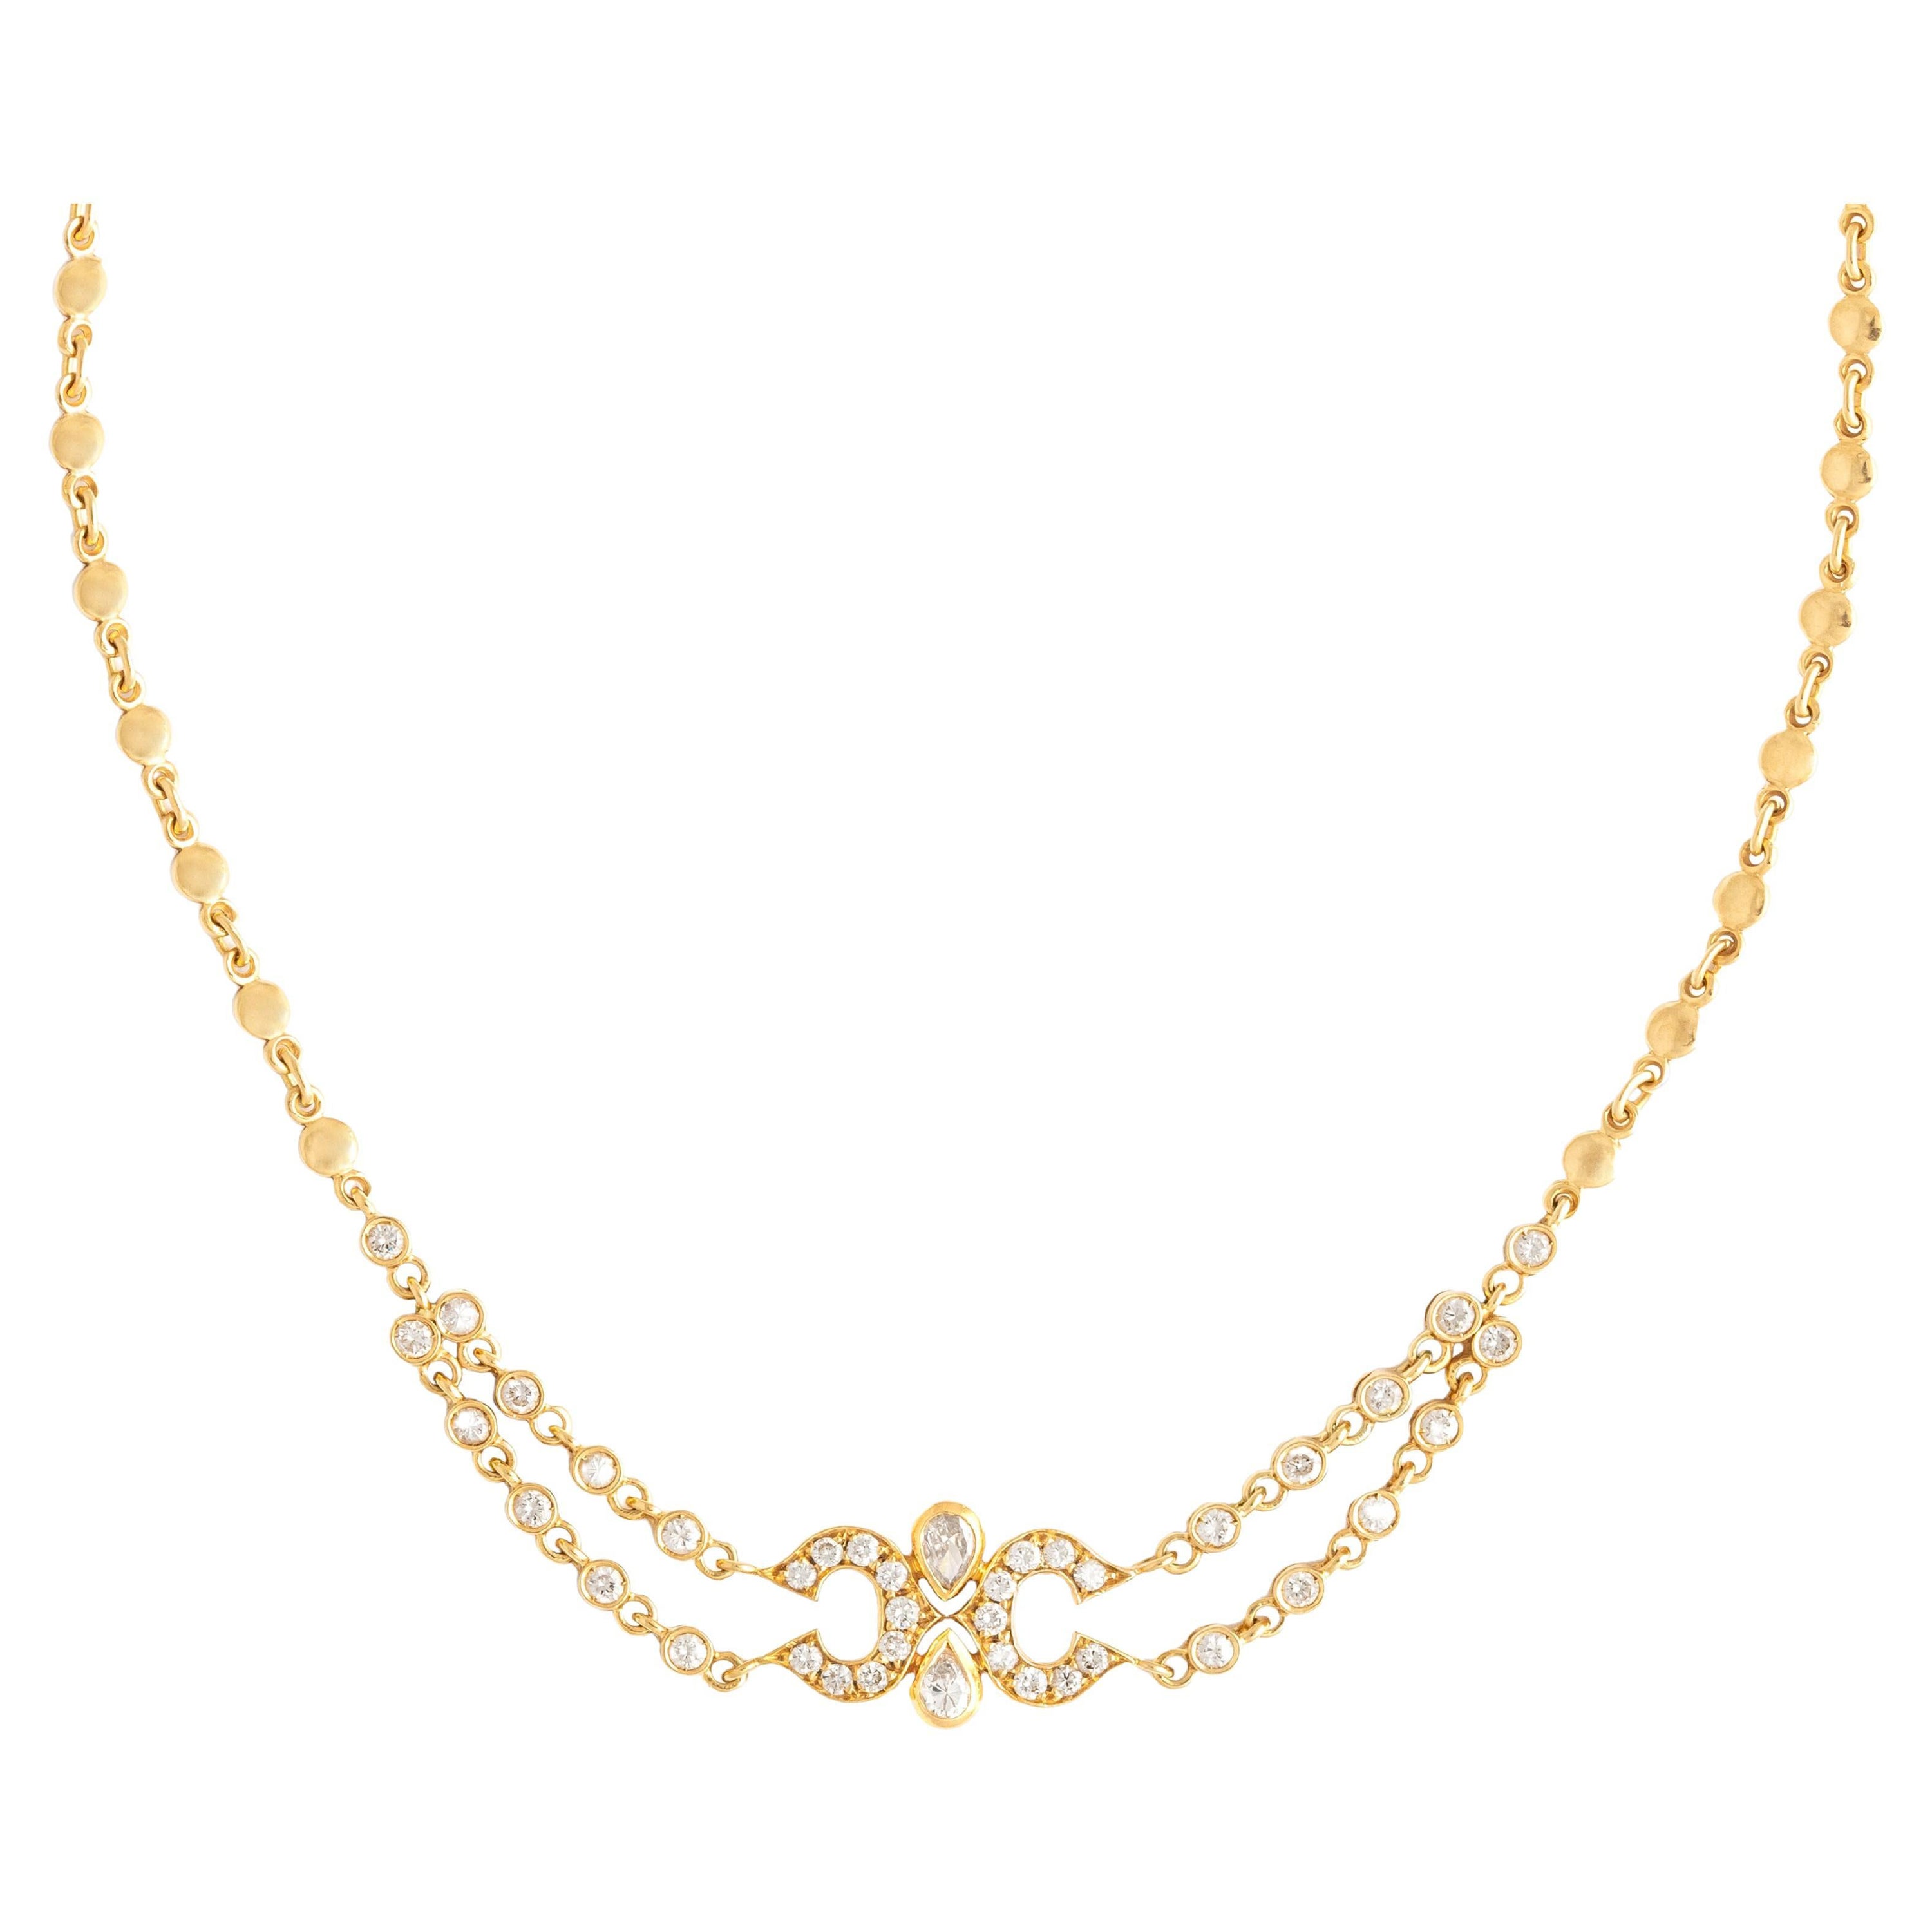 Cartier Diamond Yellow Gold 18k Necklace